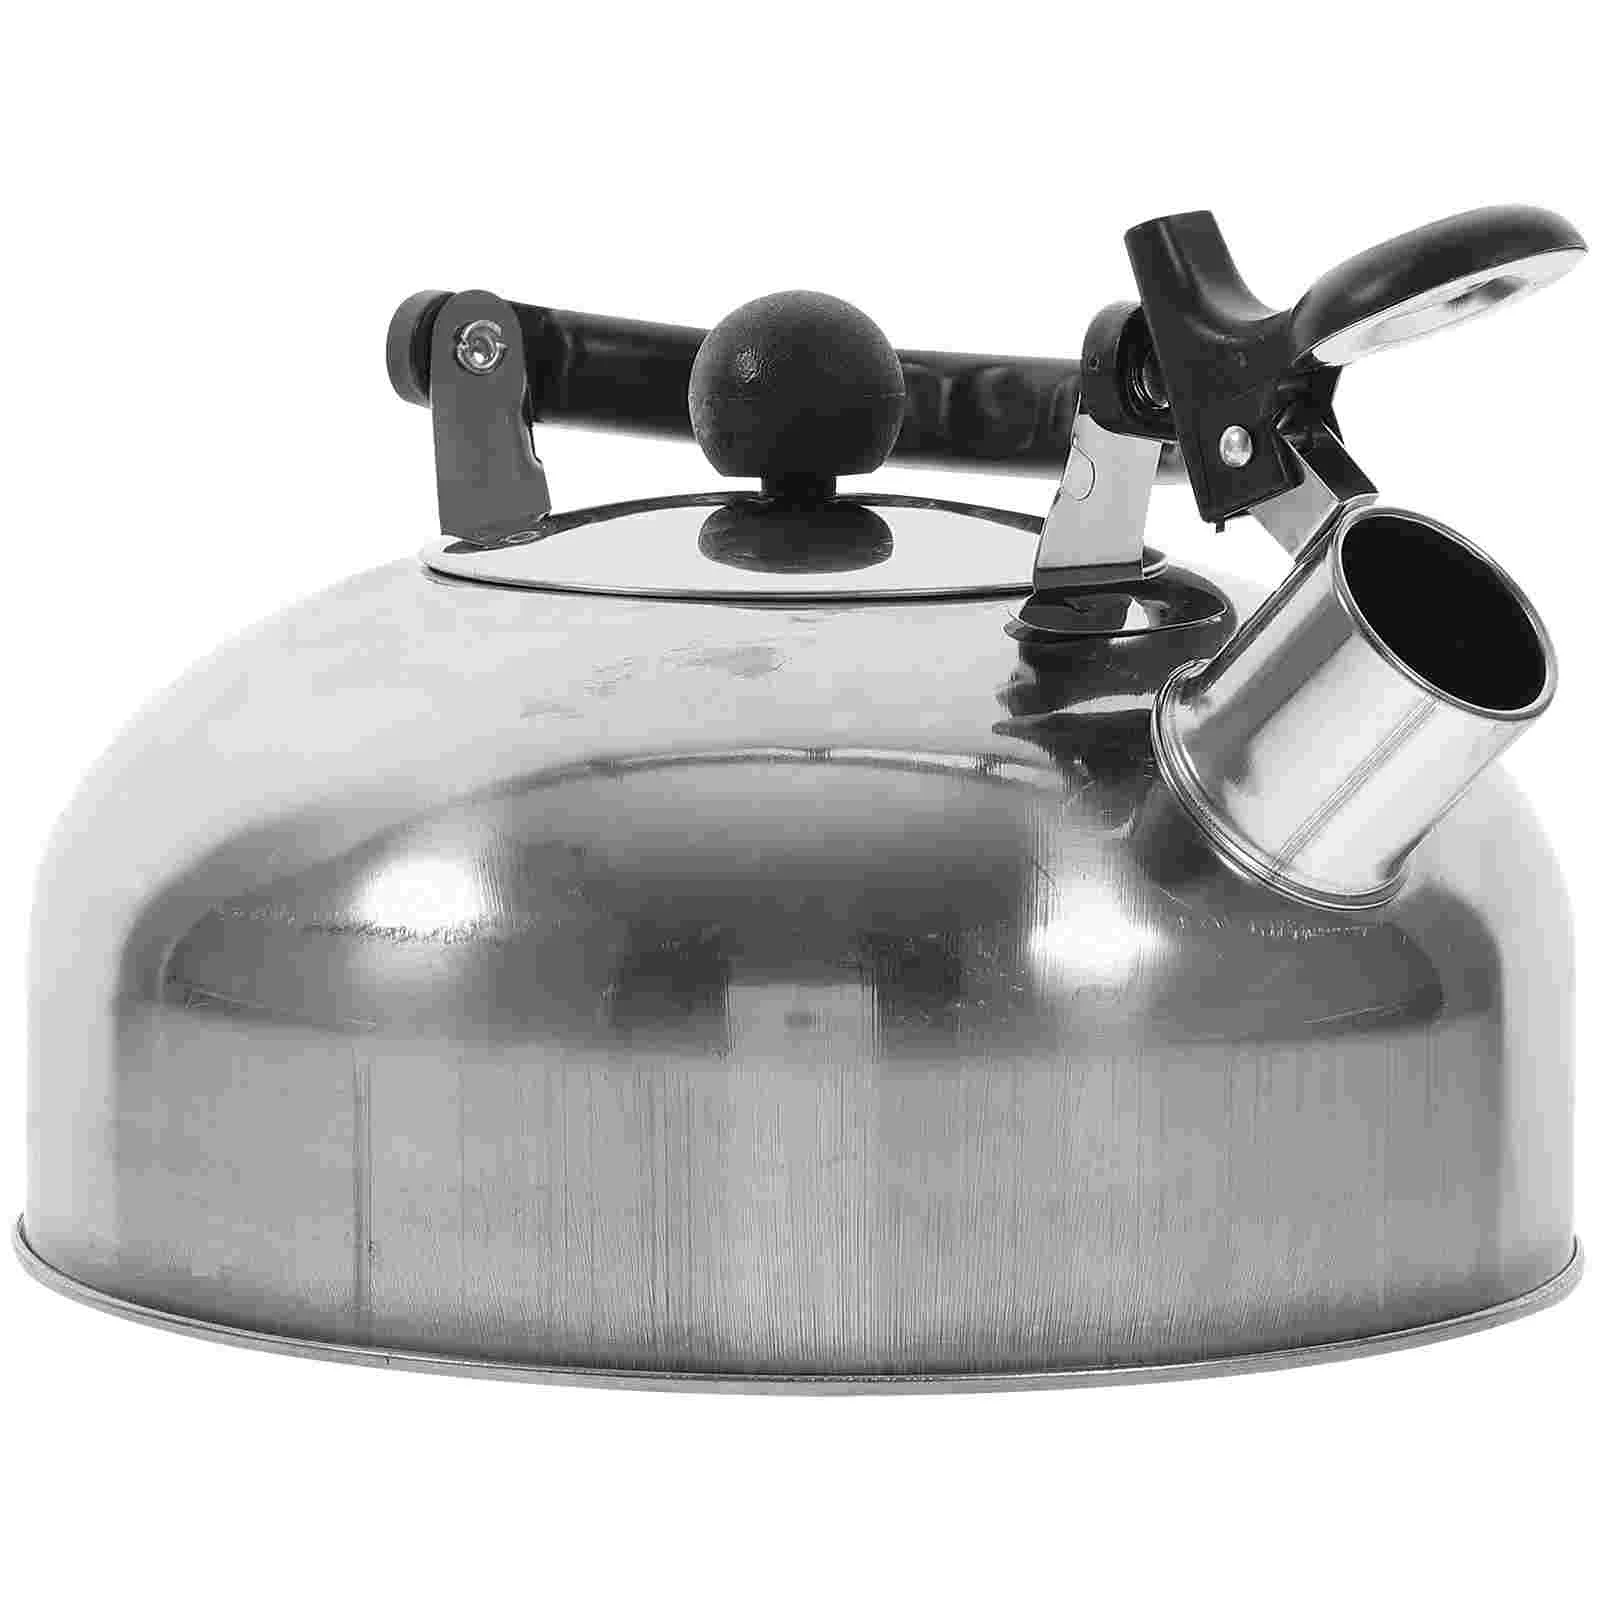 

Whistling Tea Kettle 1. 8L Stainless Steel Tea Kettle Flat Bottom Whistling Teakettle Stove Boiling Teapot for Home Office